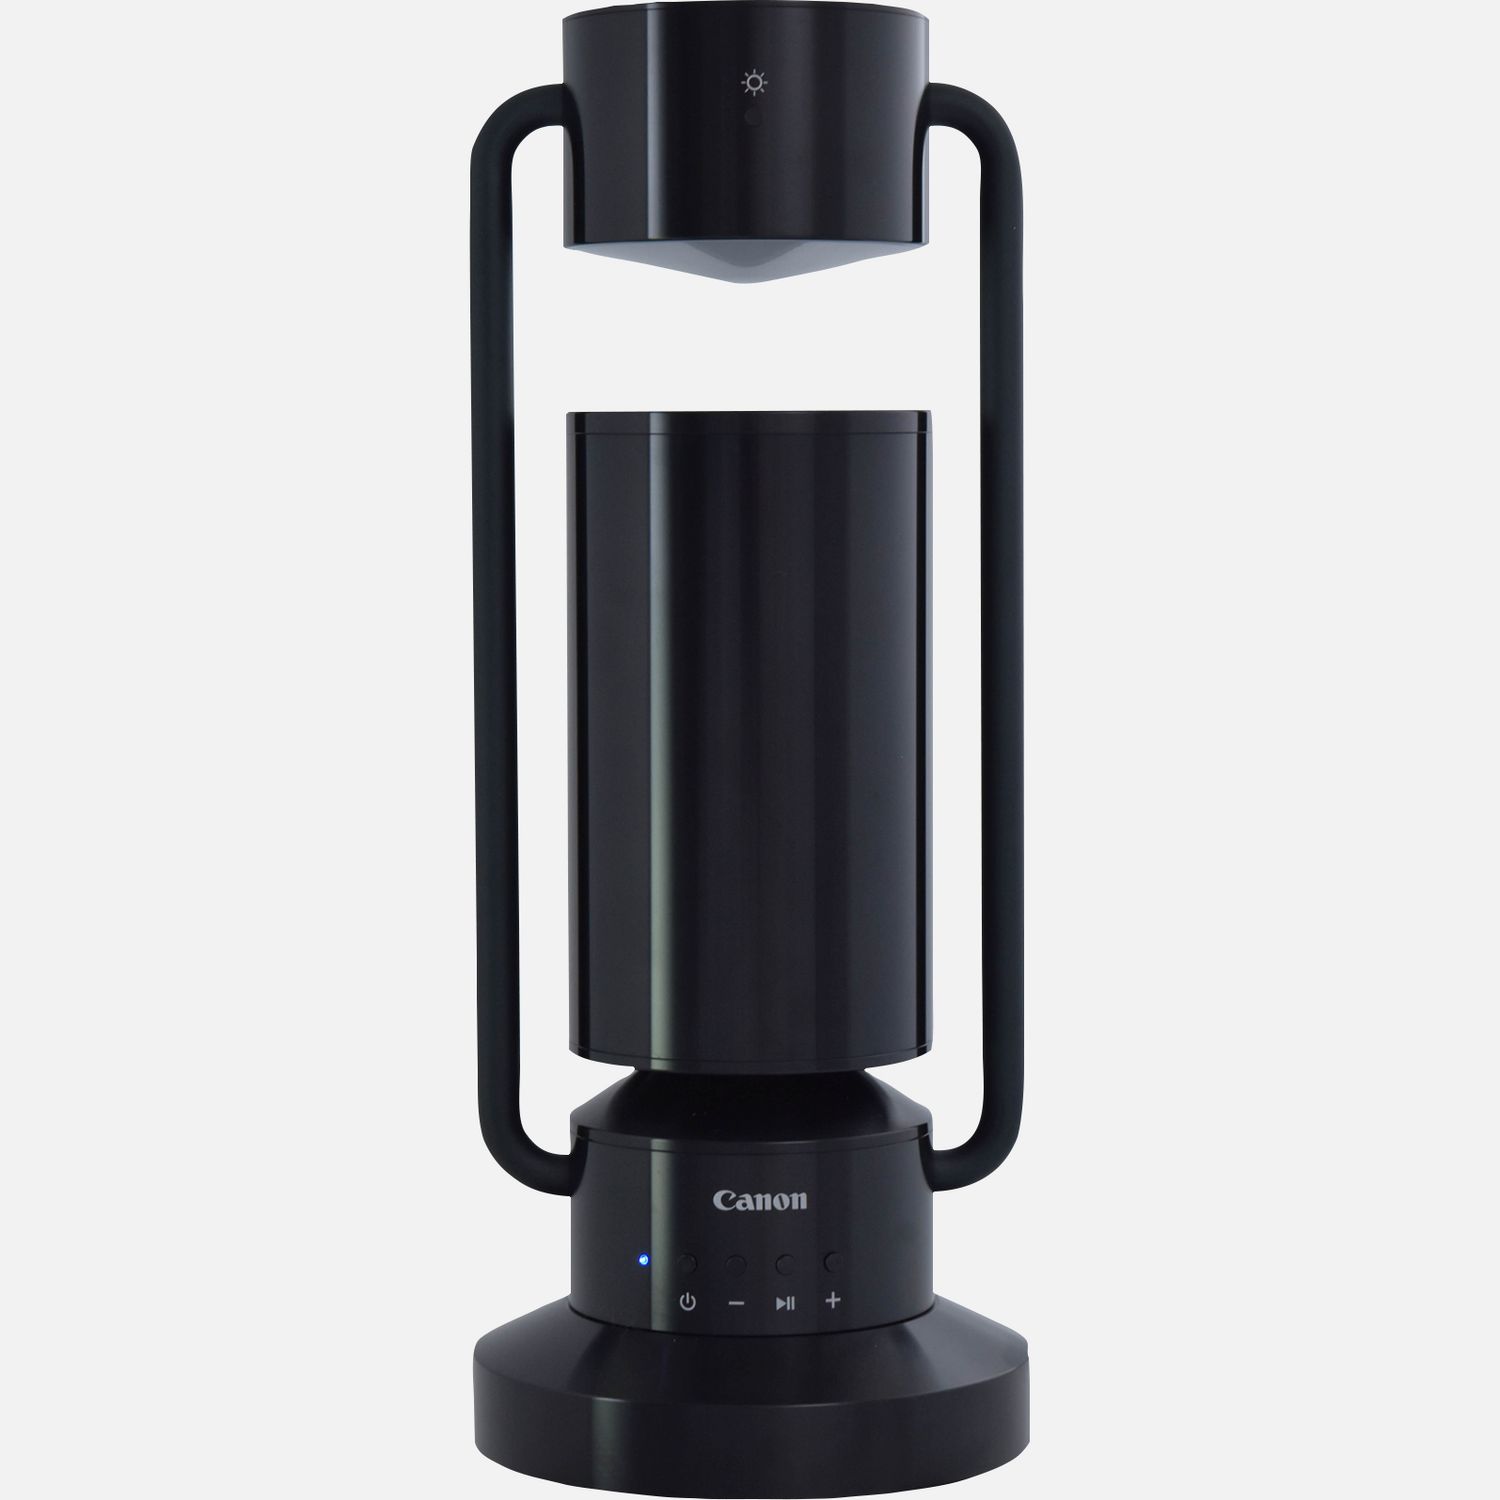 Buy Canon Leuchte & Lautsprecher ML-A: drahtlose Bluetooth Lautsprecher  Lampe aus Aluminium - Schwarz in Bluetooth-Lautsprecher mit Licht — Canon  Schweiz Shop